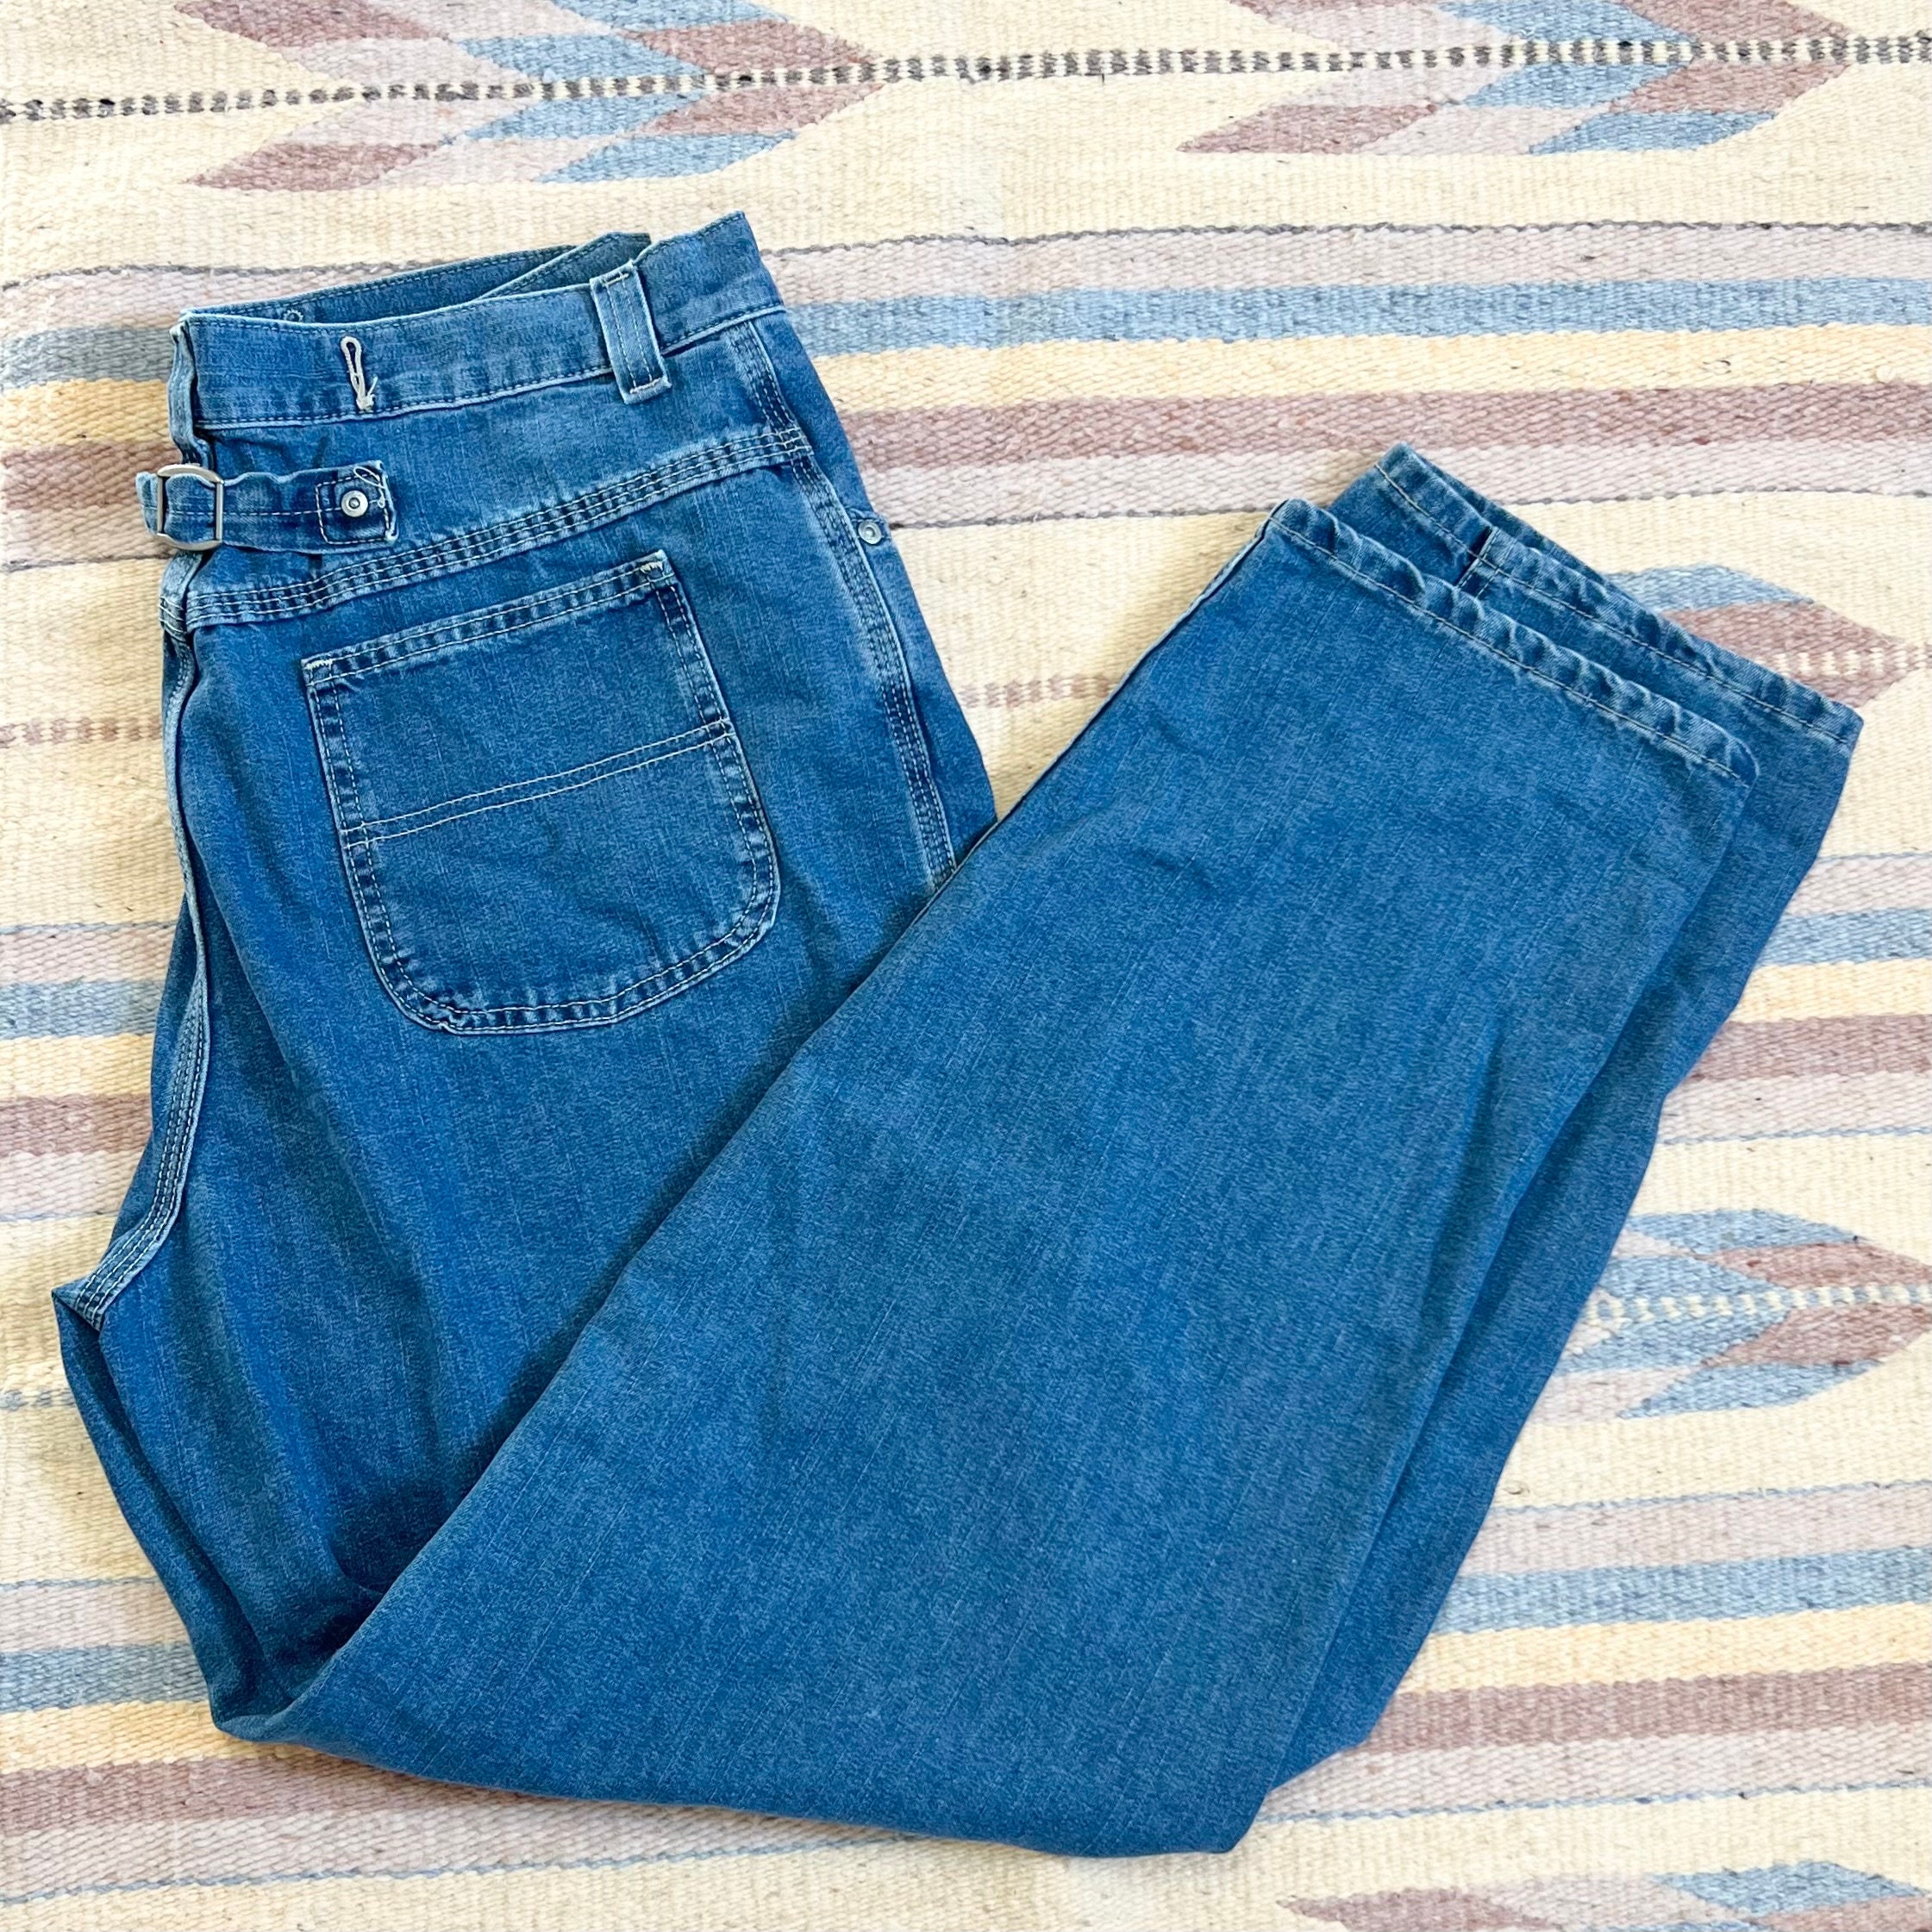 Cinch Back Jeans - Etsy